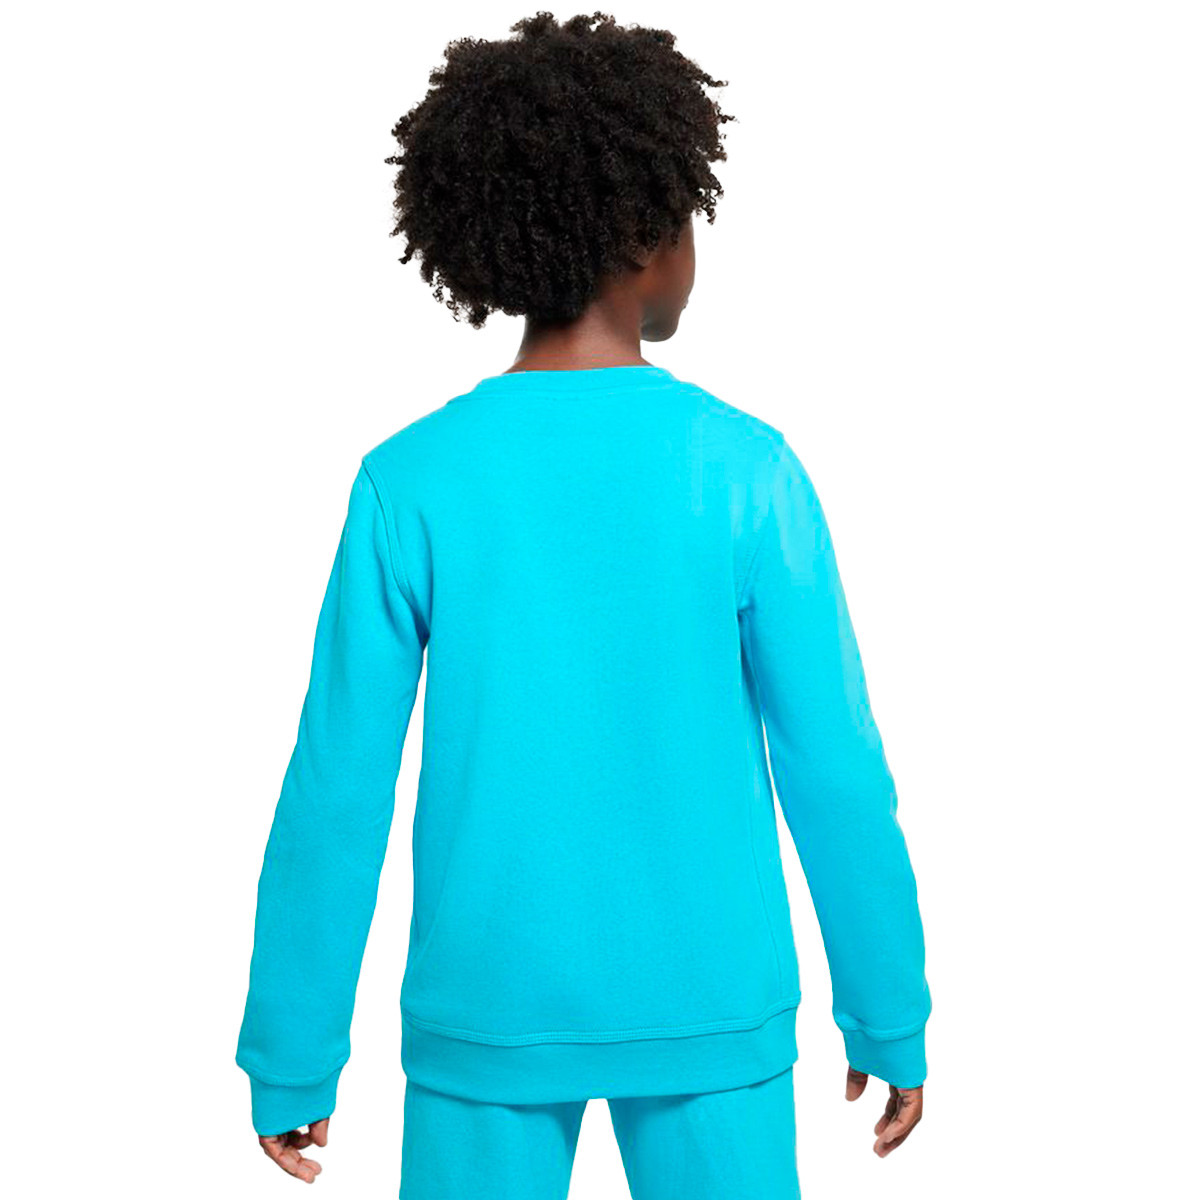 Sweat Nike Sportswear Futura Enfant Baltic Bleu-Noir - Fútbol Emotion